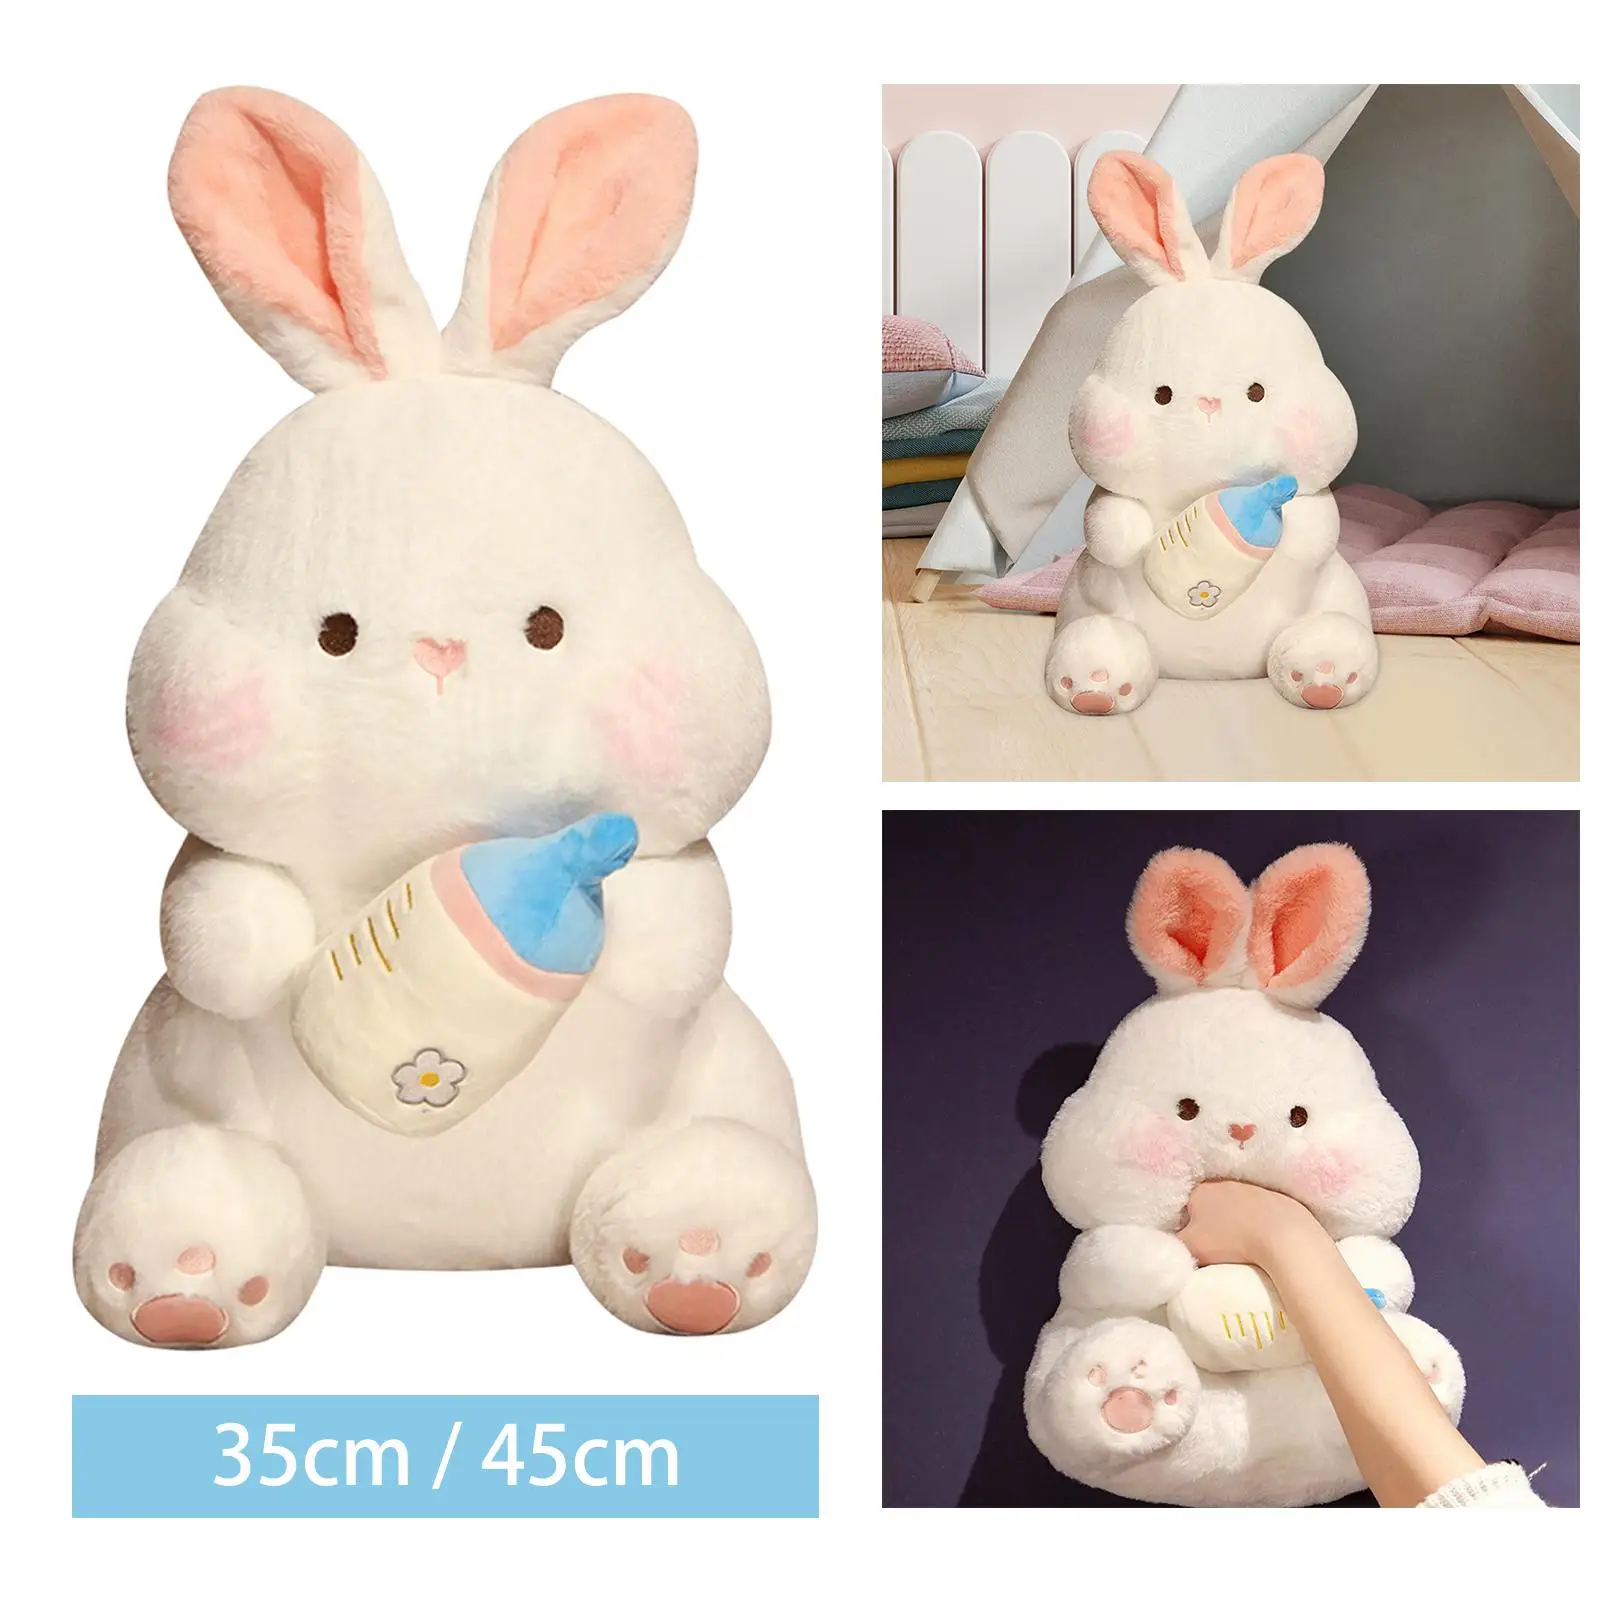 

Rabbit Plush Toy Cartoon Lovely Sleeping Hugging Pillows Easter Bunny for Halloween